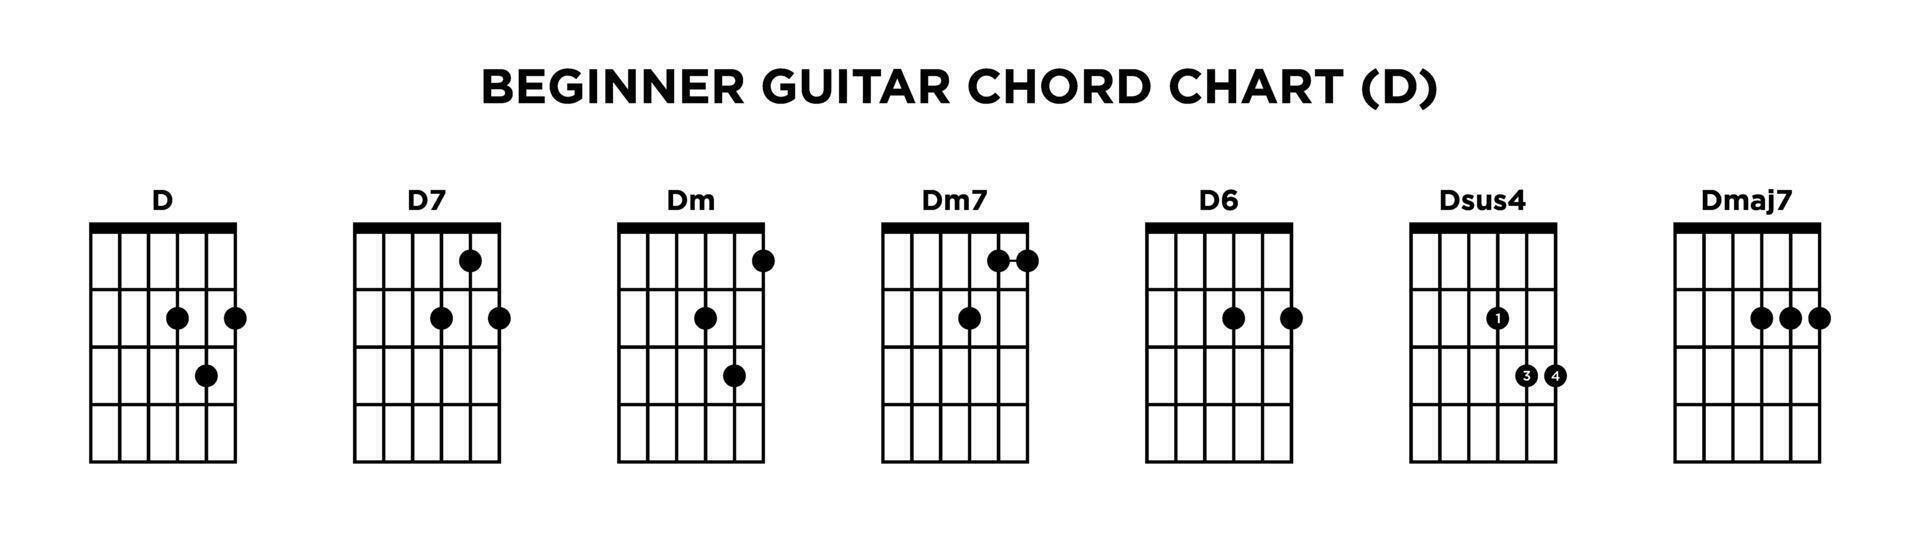 Basic Guitar Chord Chart Icon Vector Template. D key guitar chord.